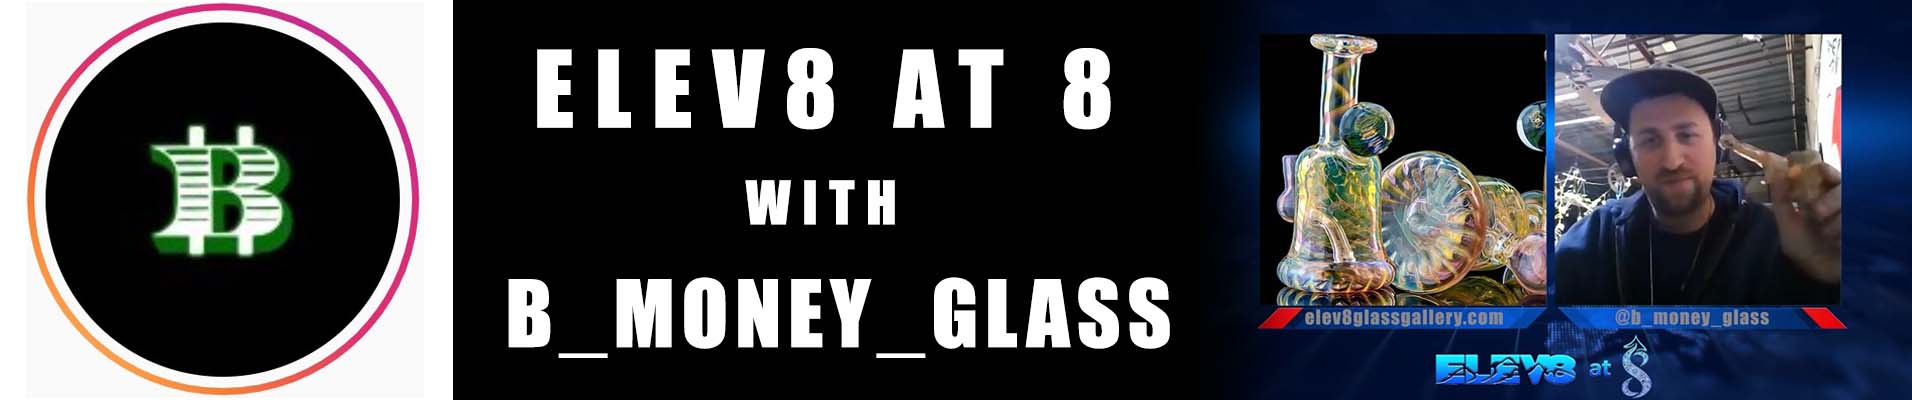 b-money-glass-elev8-at-8-event-page-banner.jpg